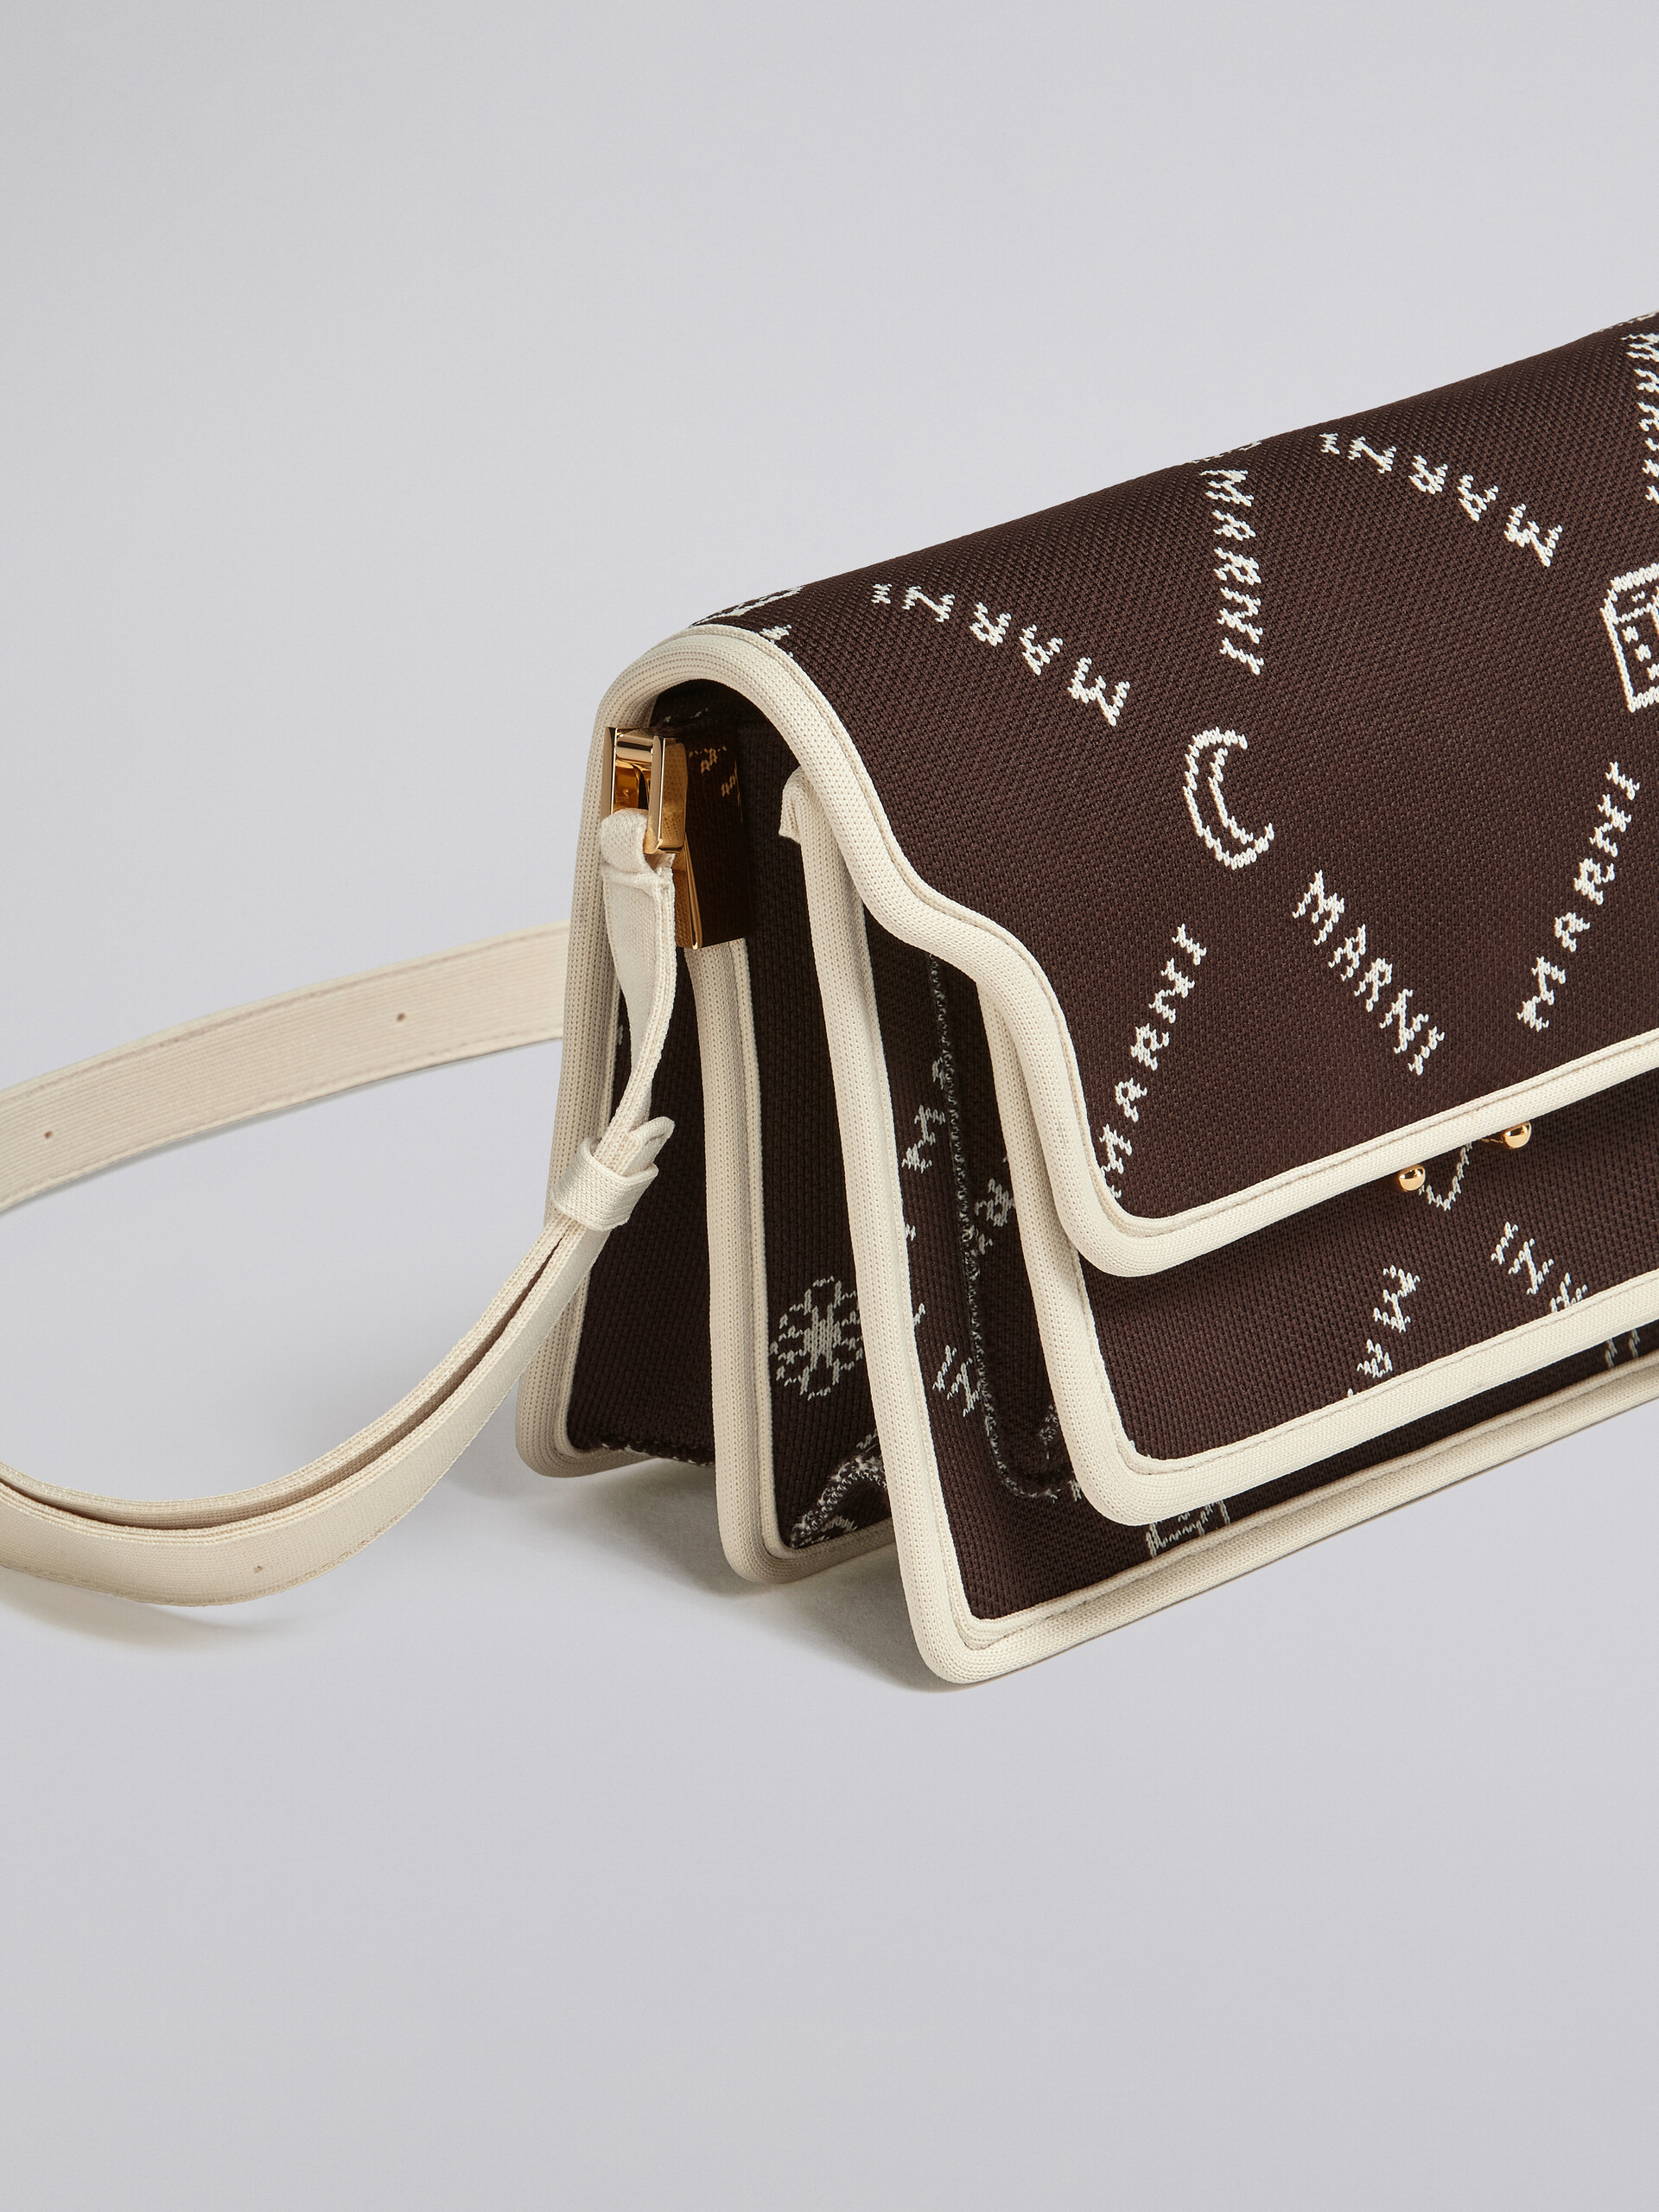 TRUNK SOFT medium bag in brown Marnigram jacquard - Shoulder Bag - Image 5